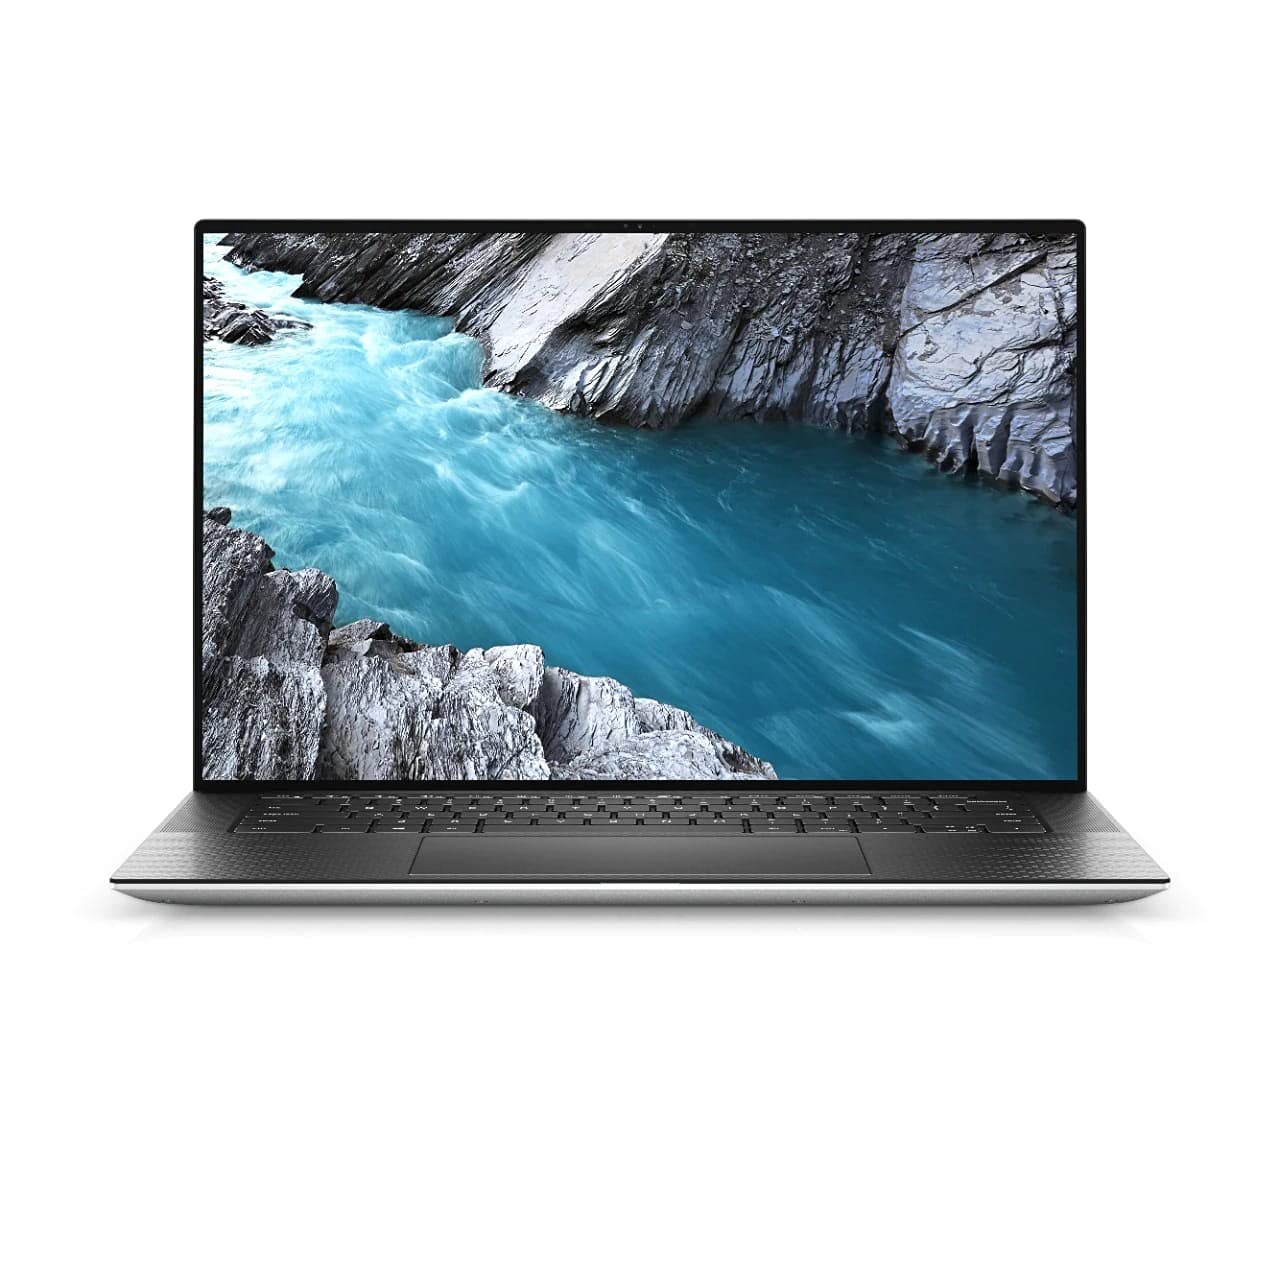 Dell 2020 XPS 9500 Laptop 15-inch - Intel Core i5 10th Gen - i5-10300H - Quad Core 4.5Ghz - 512GB SSD - 64GB RAM - 1920x1200 FHD+ - Windows 10 Home Silver (Renewed)